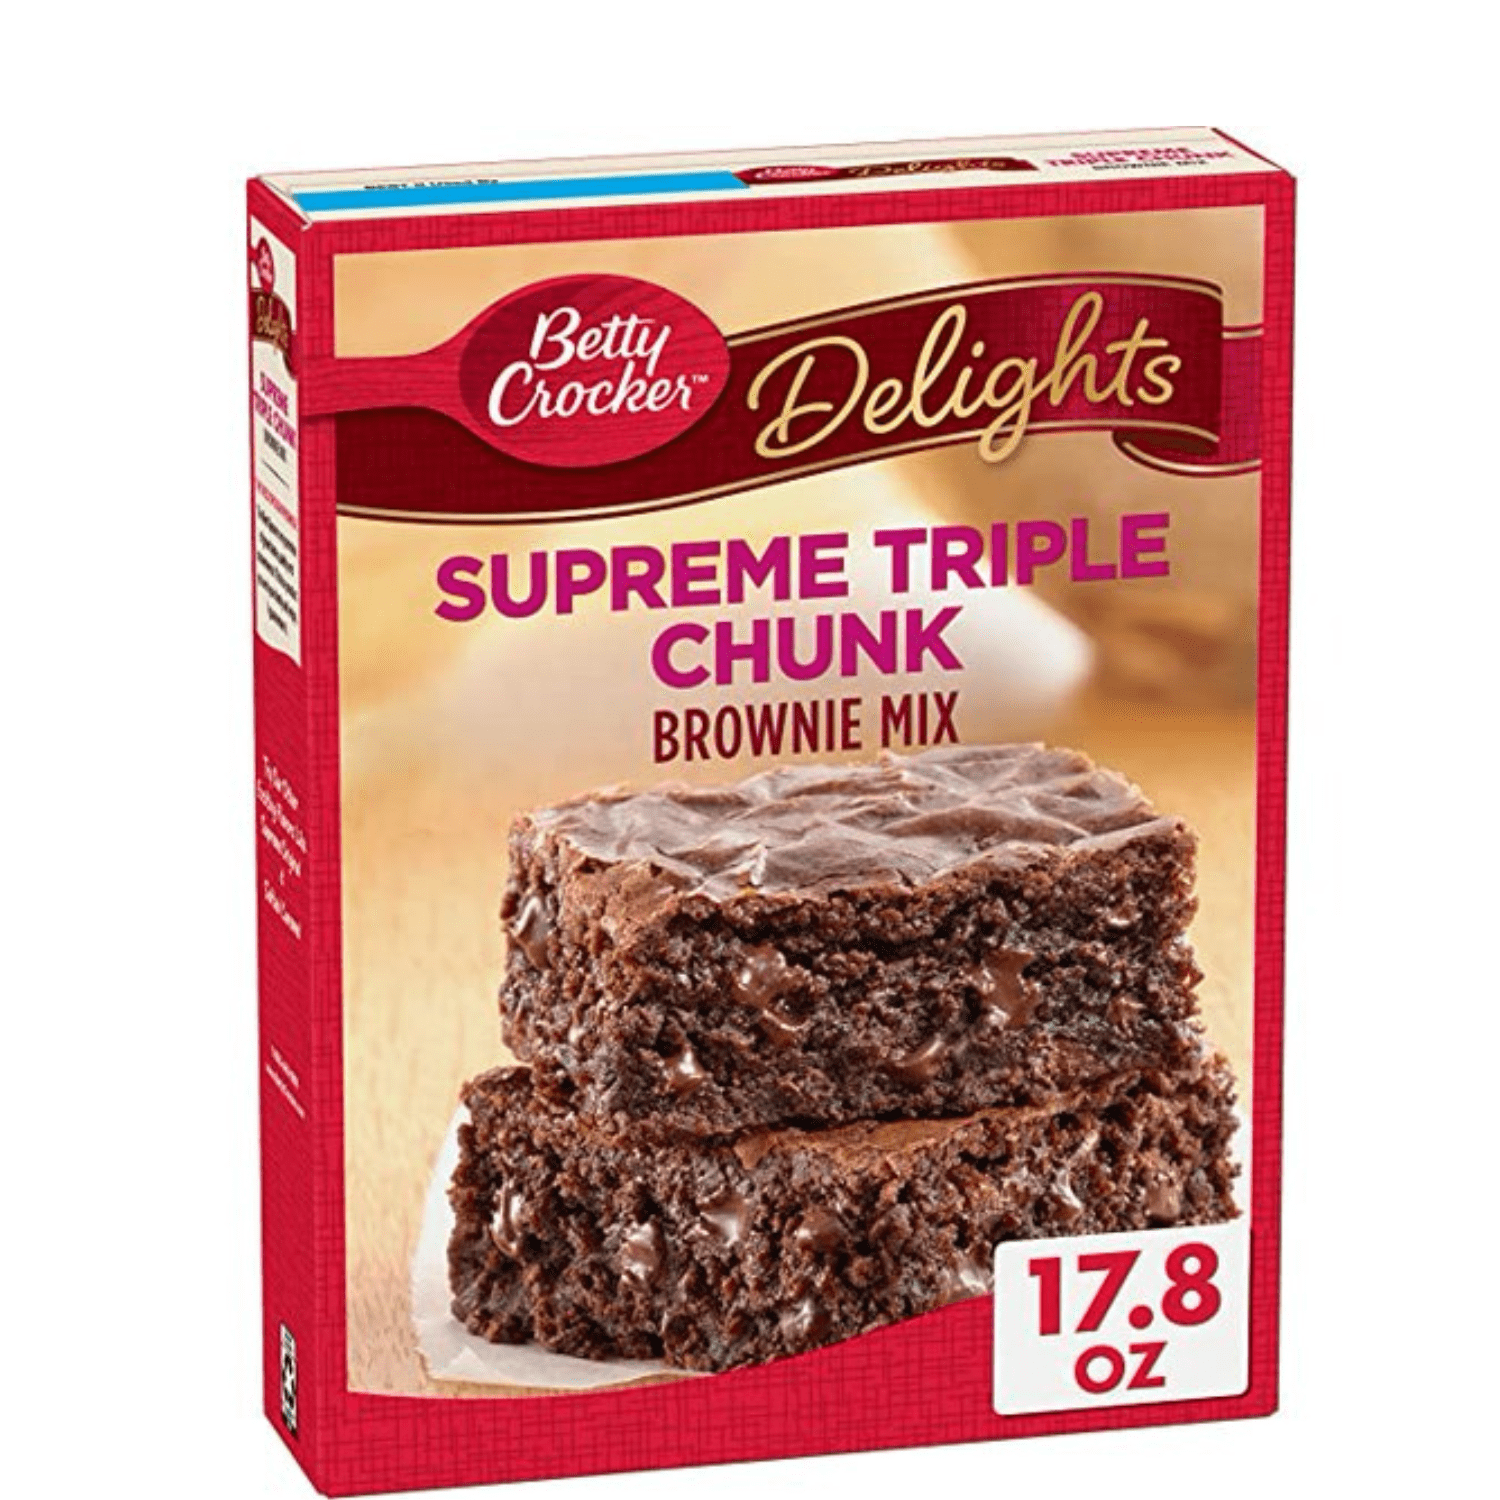 Mezcla para brownies Supreme triple chunk. Betty Crocker. 504 gr